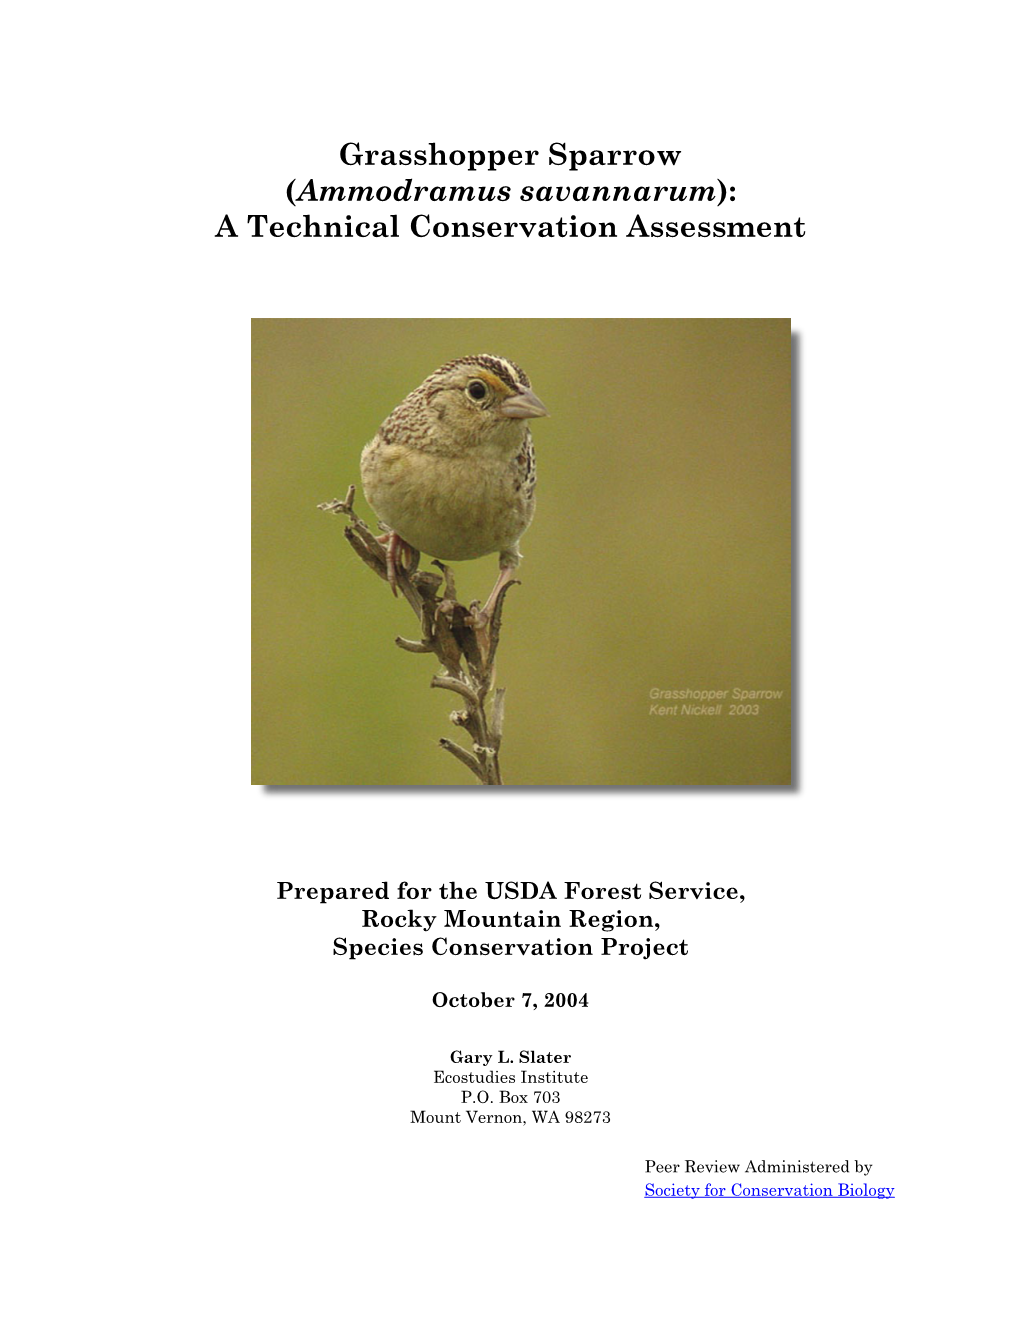 Ammodramus Savannarum): a Technical Conservation Assessment